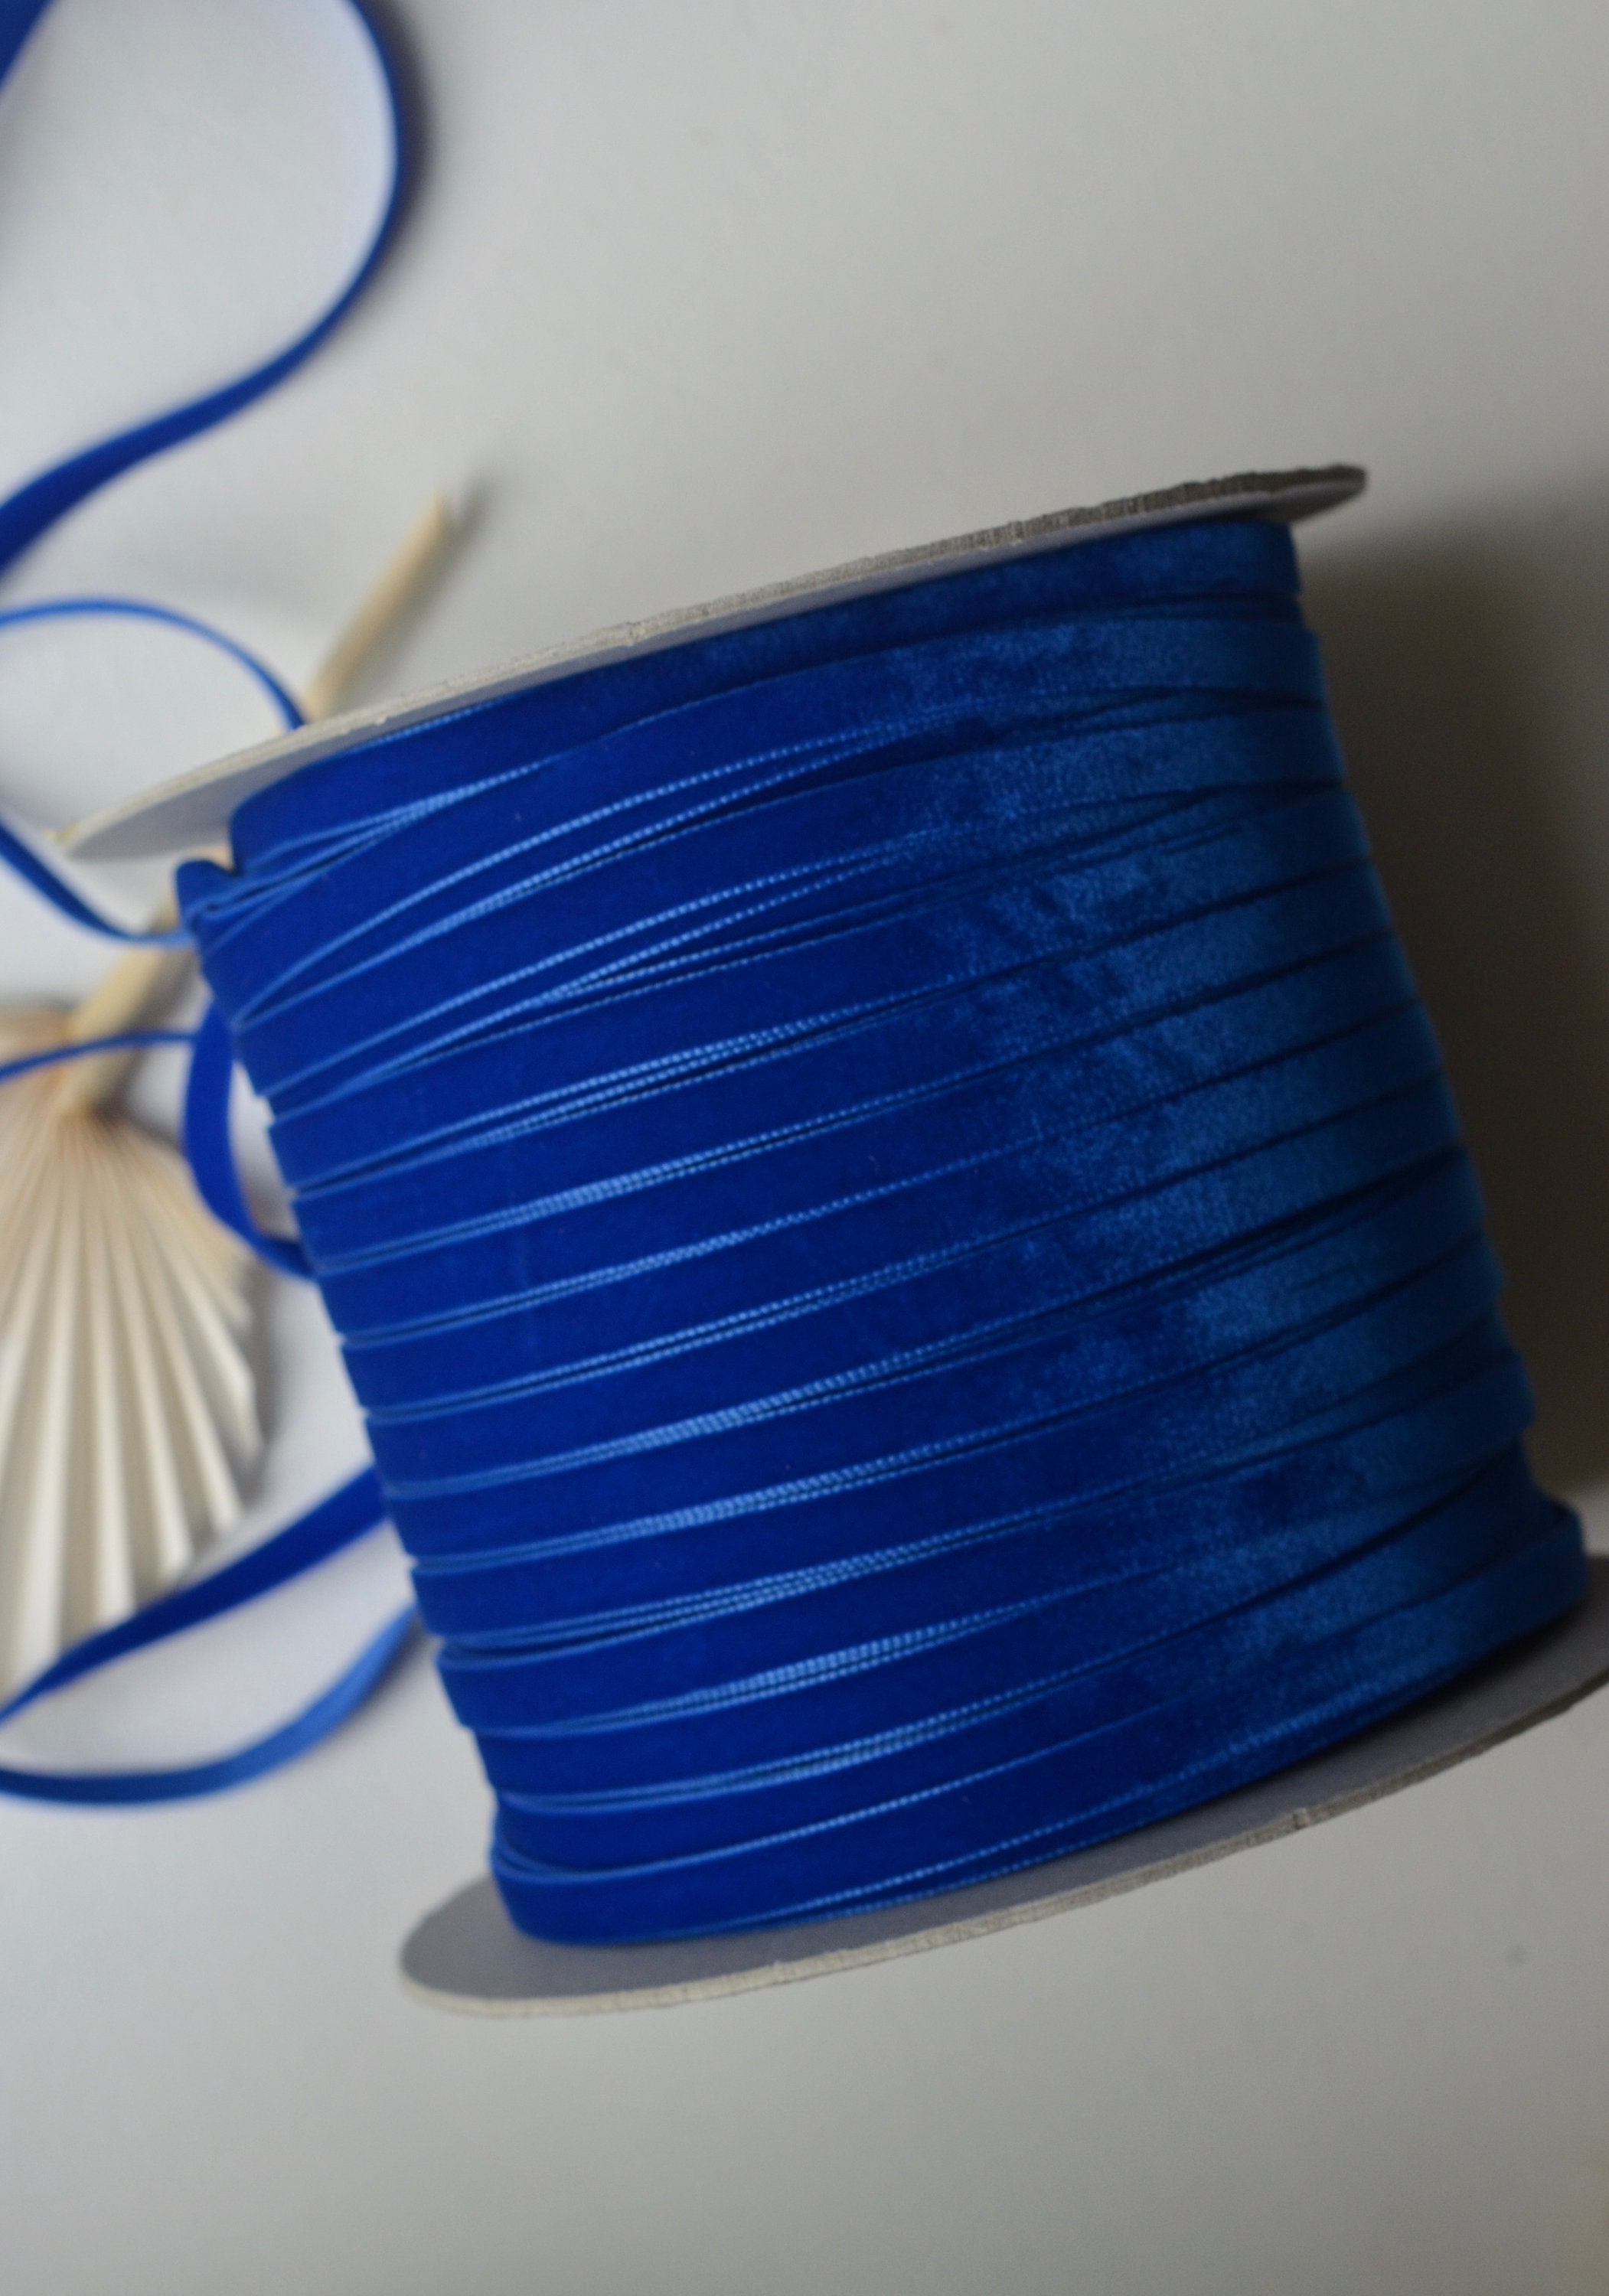 Cobalt Blue Velvet Fabric 6314 – Fabrics4Fashion